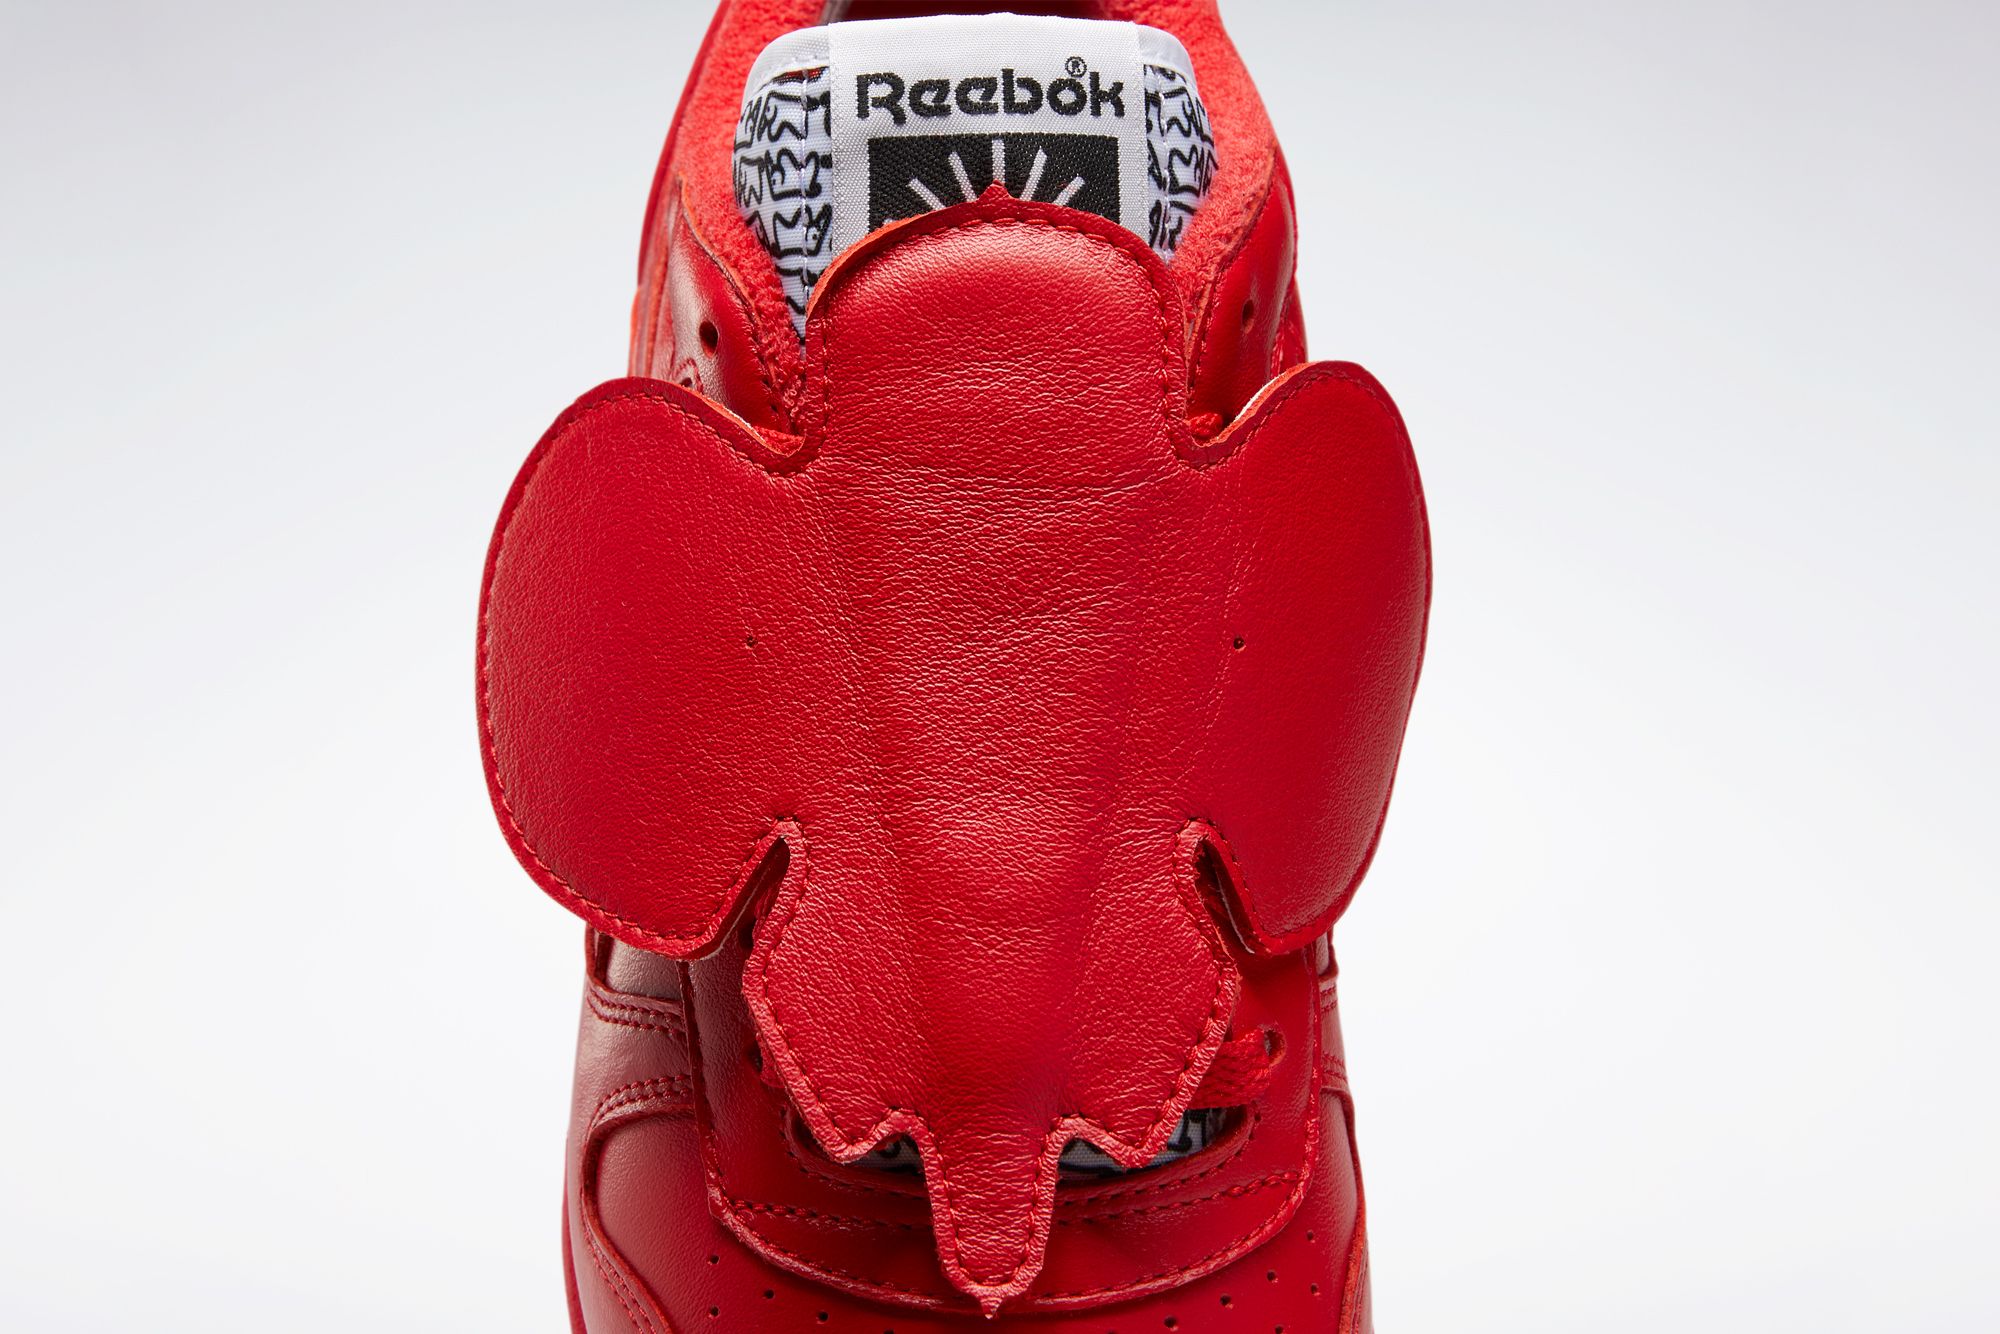 Eames x Reebok Classic Leather 'Elephant'